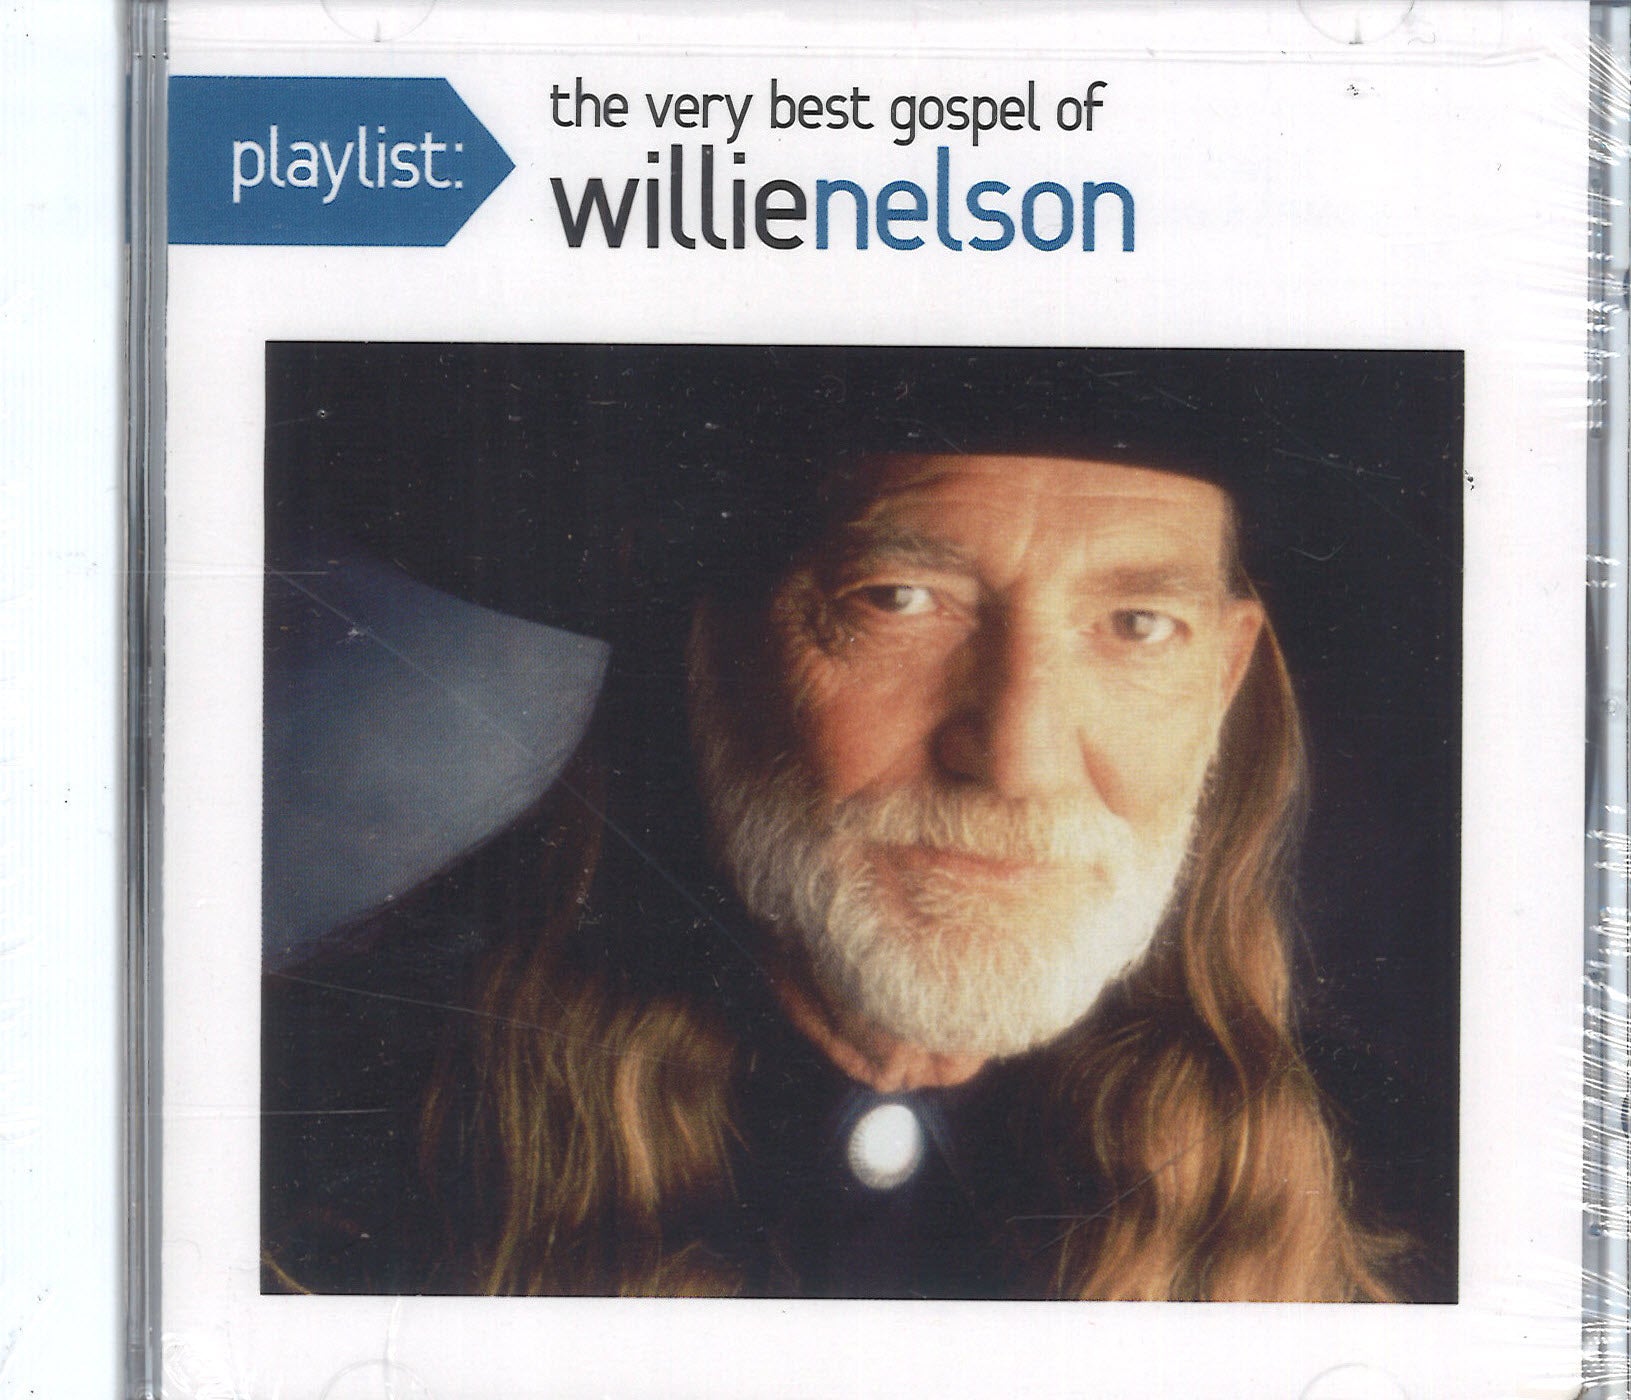 Willie Nelson Playlist: The Very Best Gospel of Willie Nelson